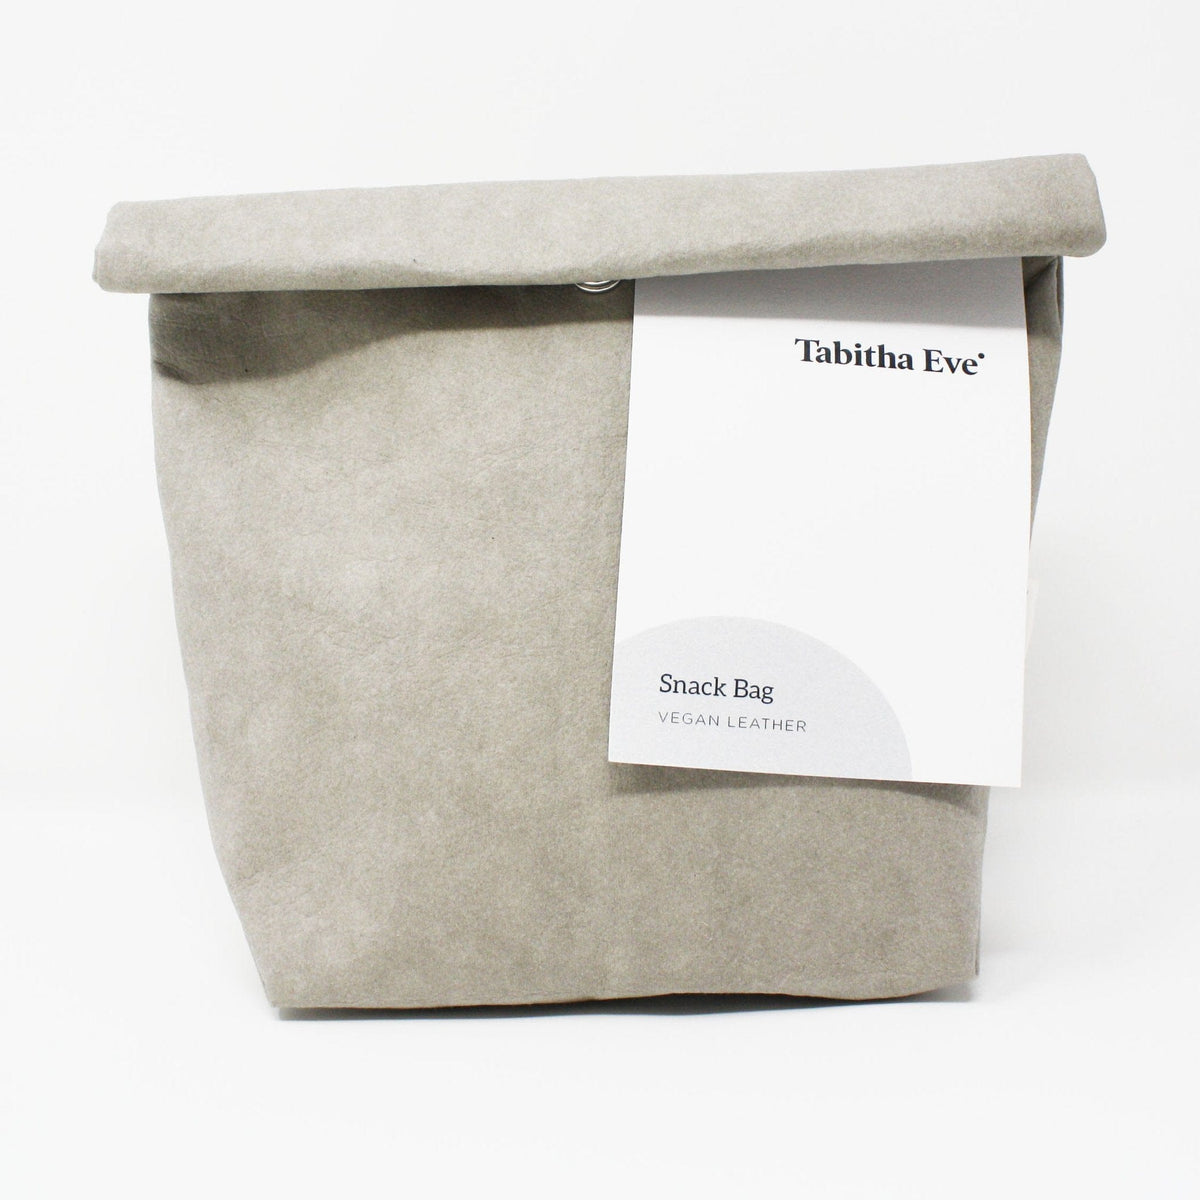 Tabitha Eve stone Vleather Snack Bag